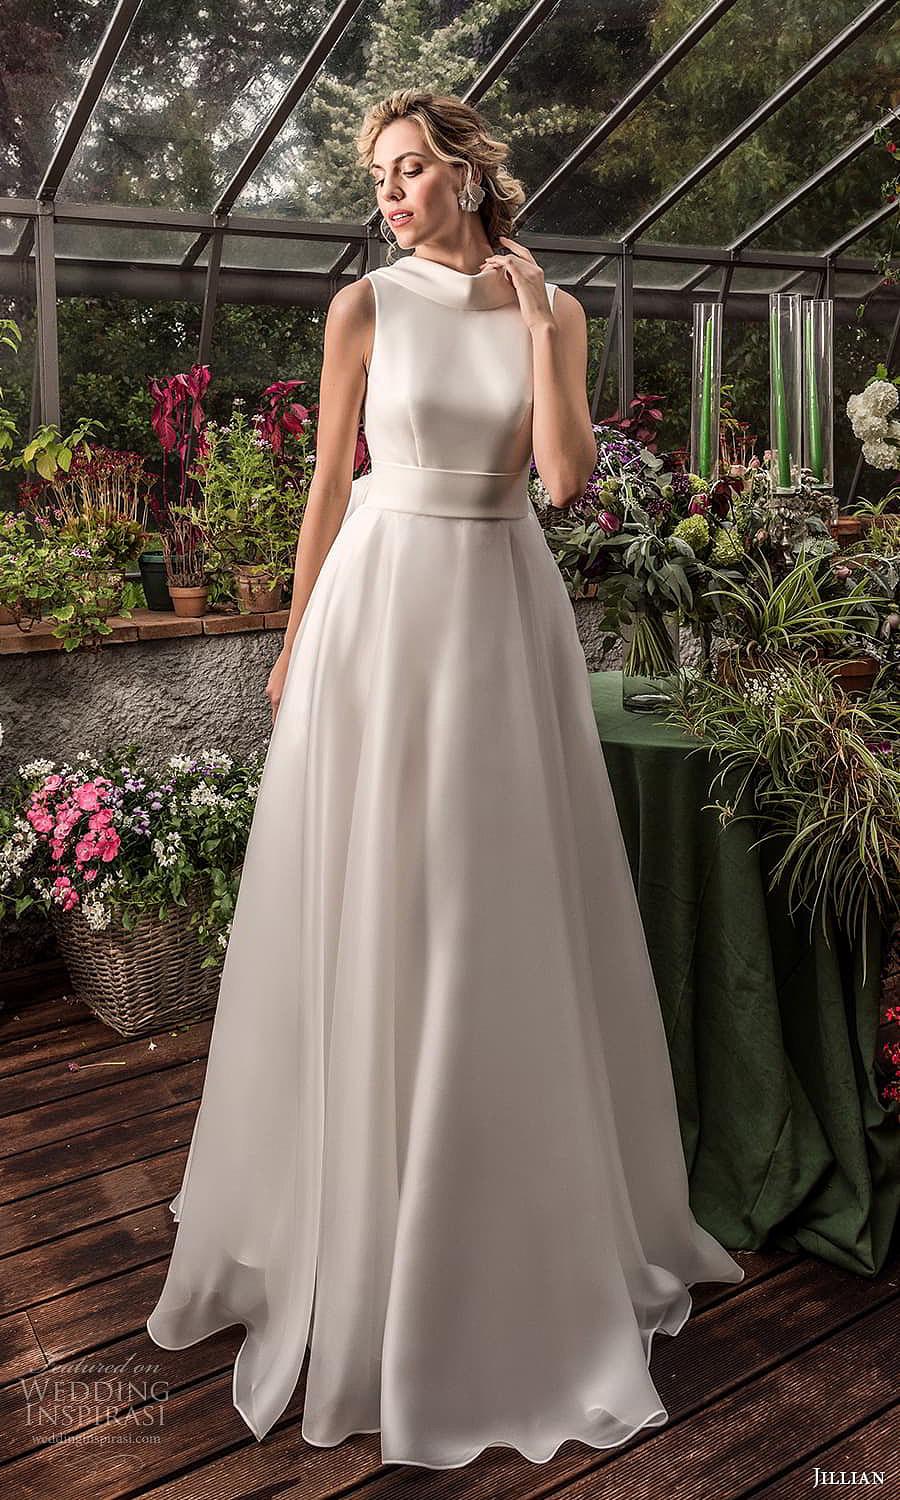 Jillian 2022"Secret Garden" 婚纱系列 打造令人难以置信的浪漫嫁 - 40